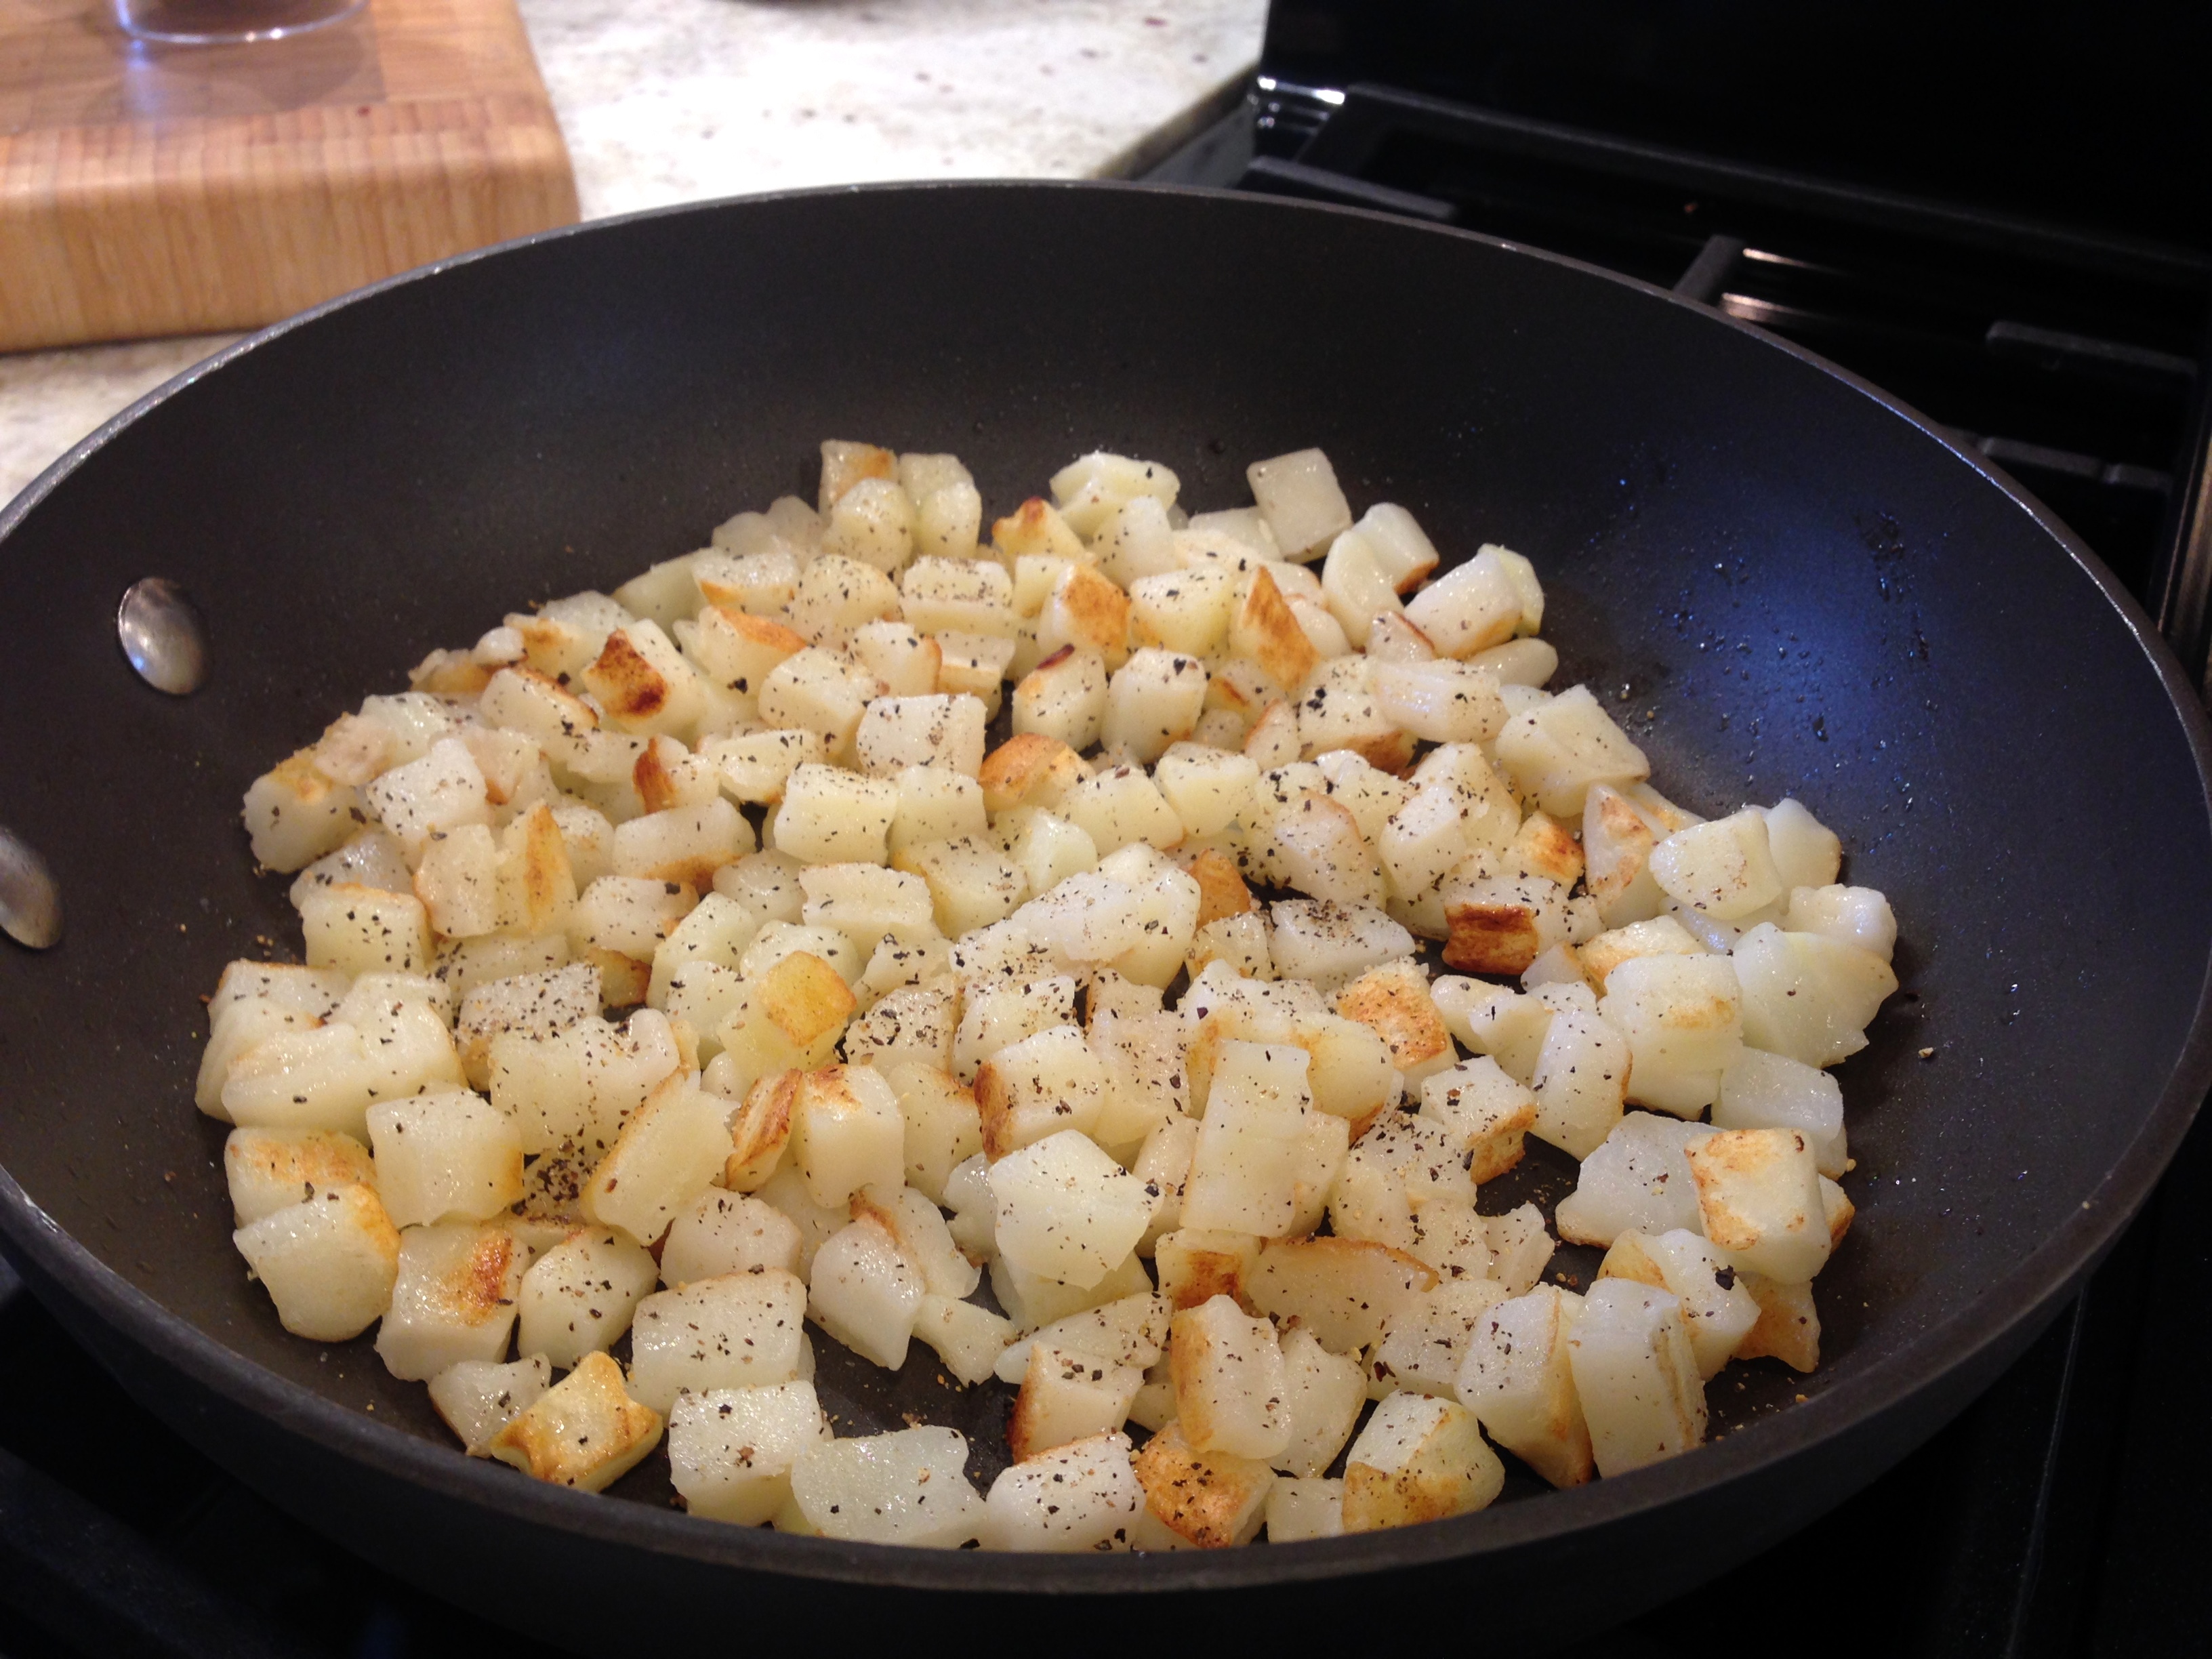 Start to brown potatoes